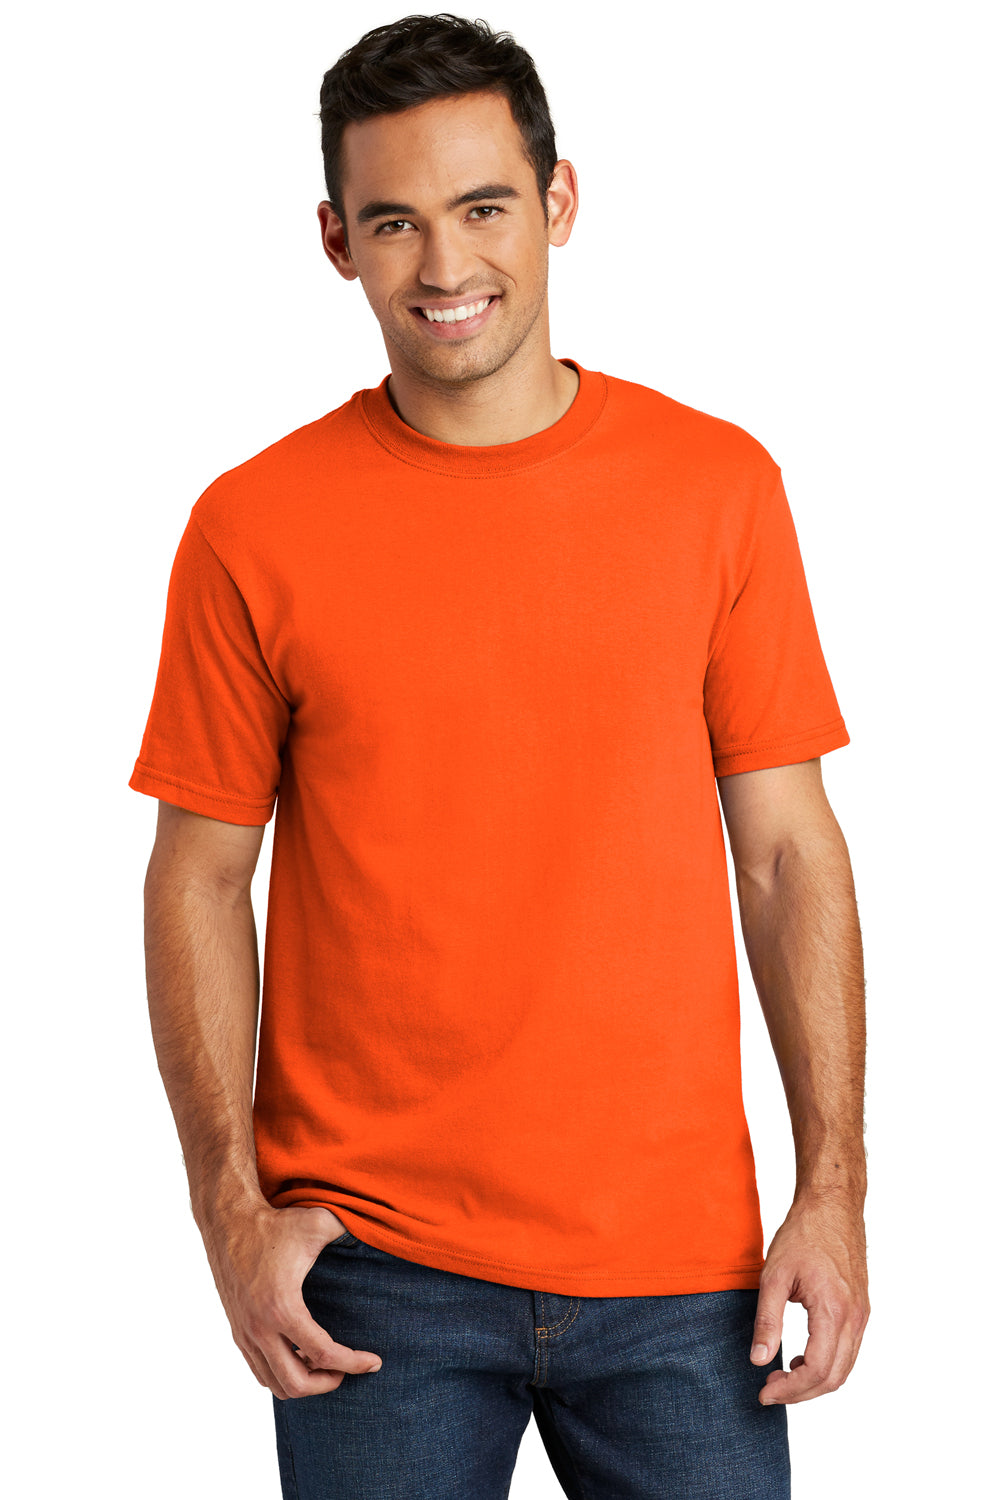 Port & Company USA100 Mens USA Made Short Sleeve Crewneck T-Shirt Safety Orange Front